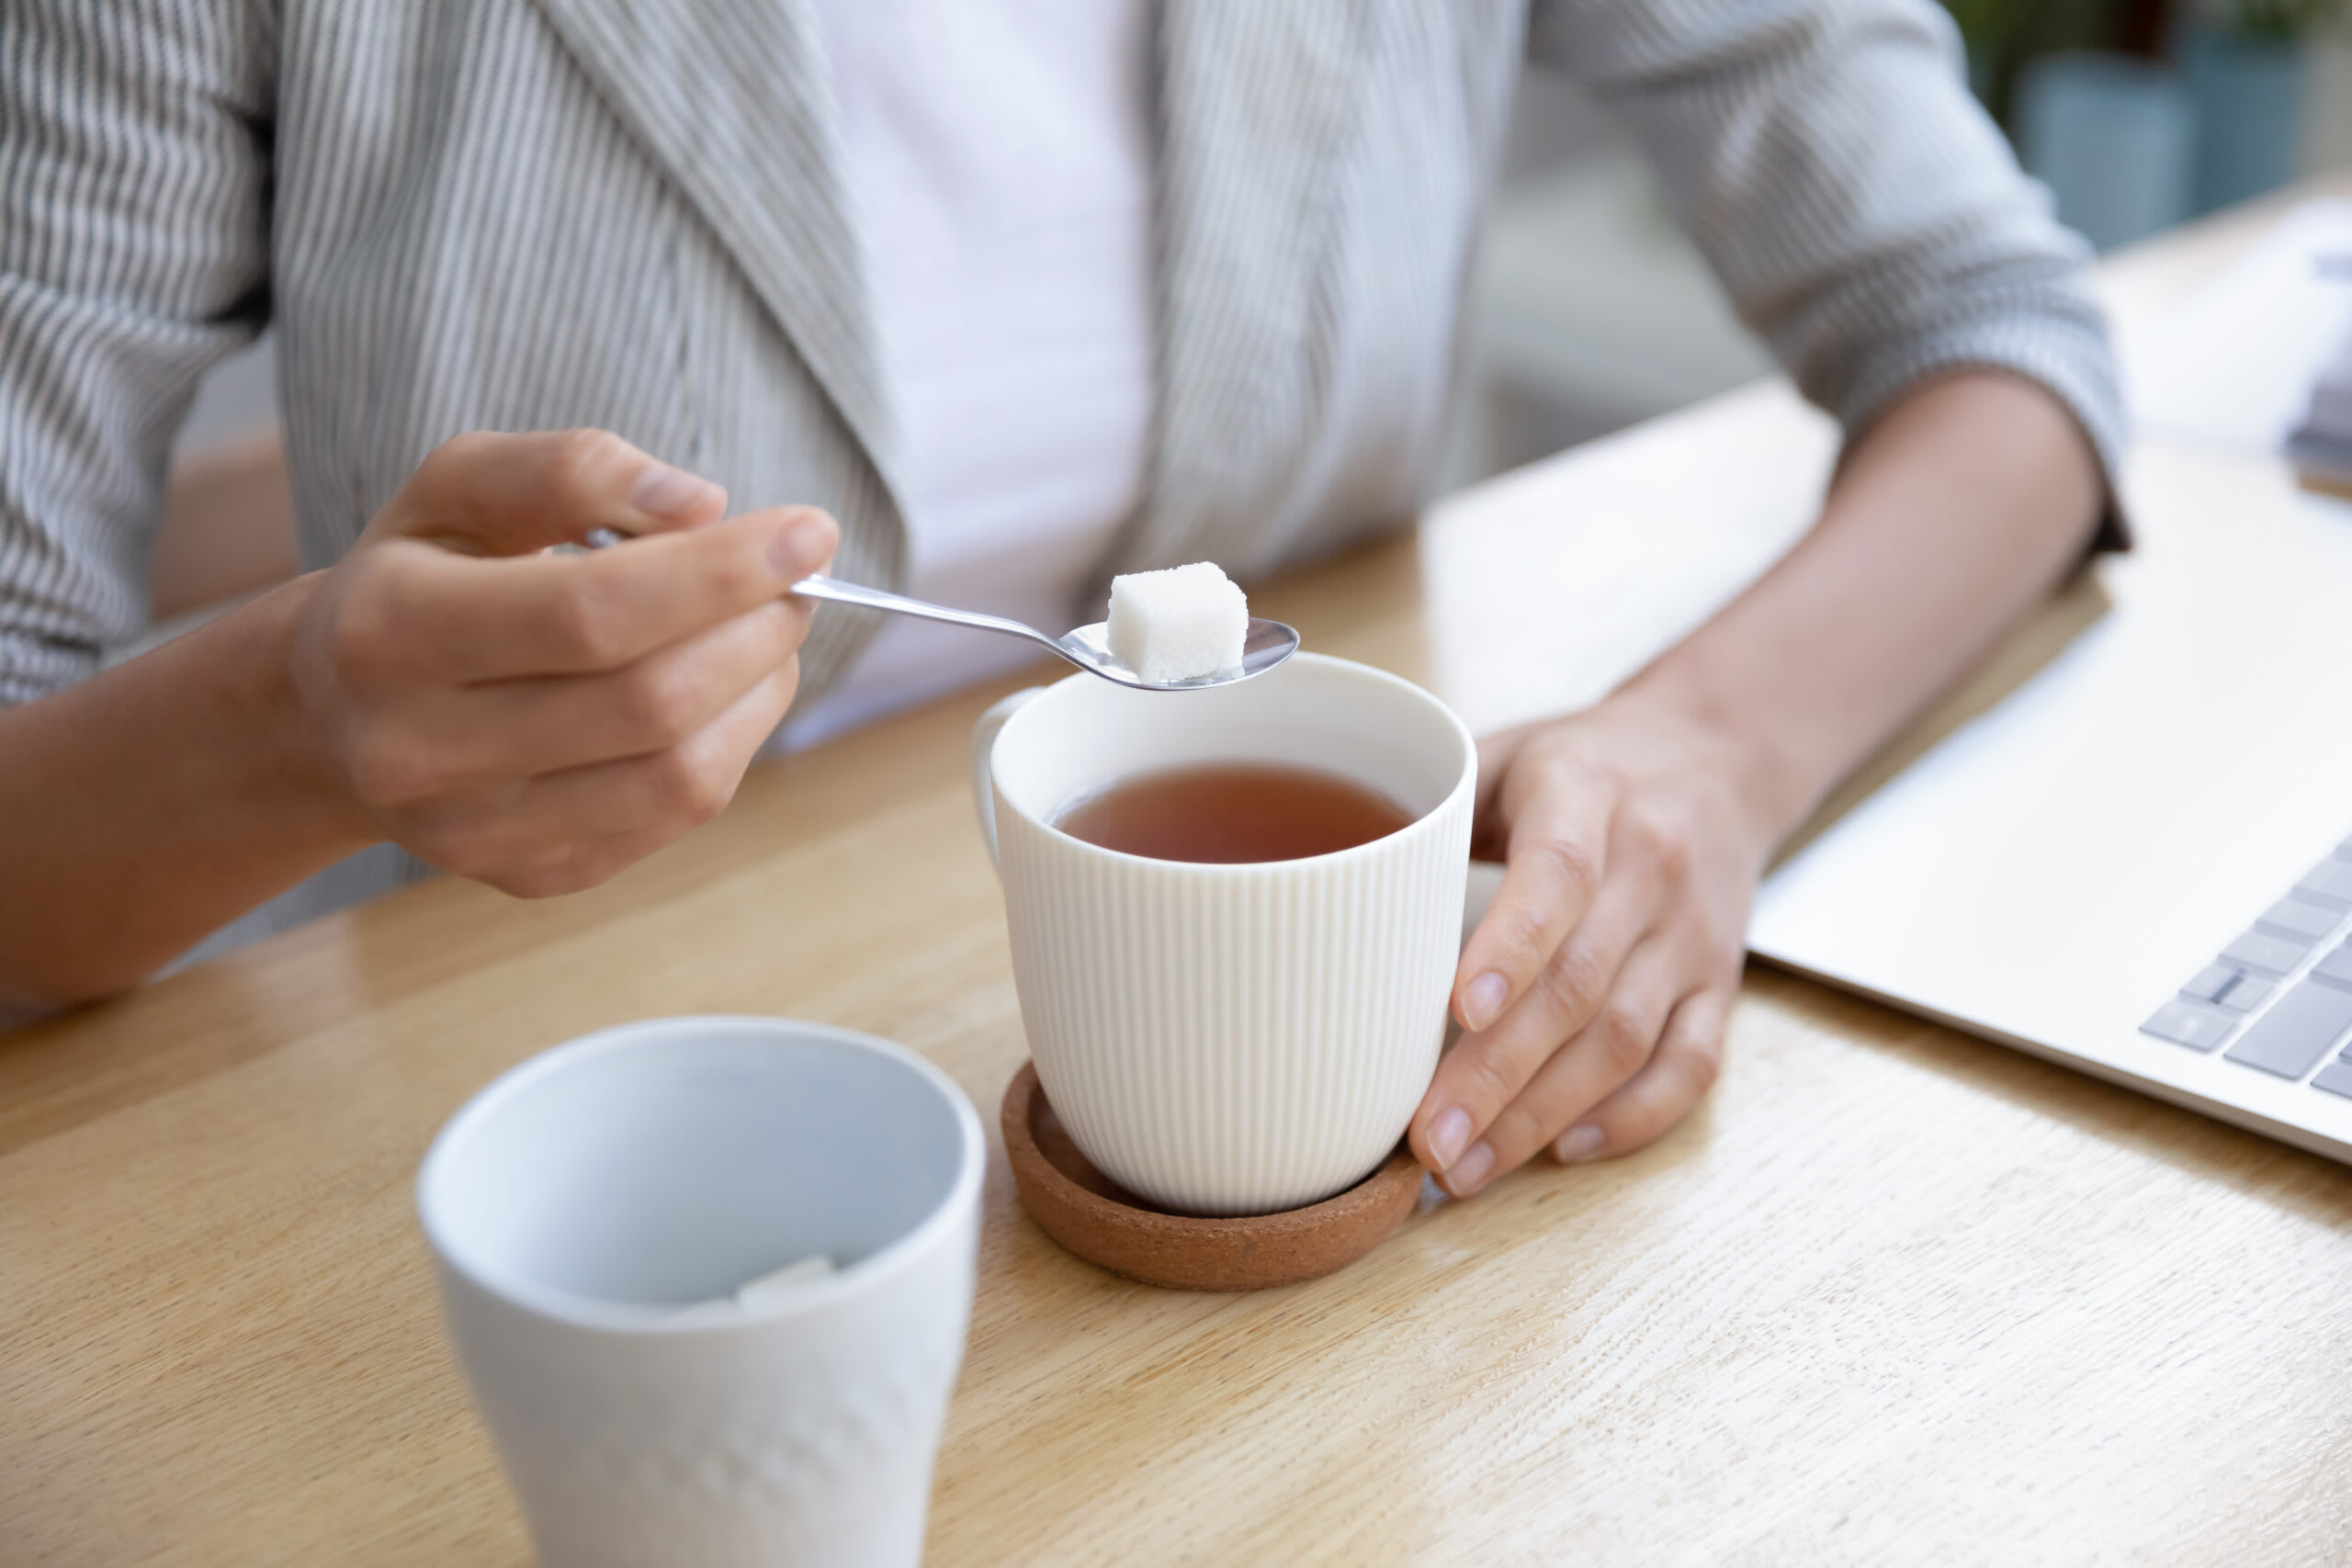 A senior woman stirs sugar in a cup of coffee.